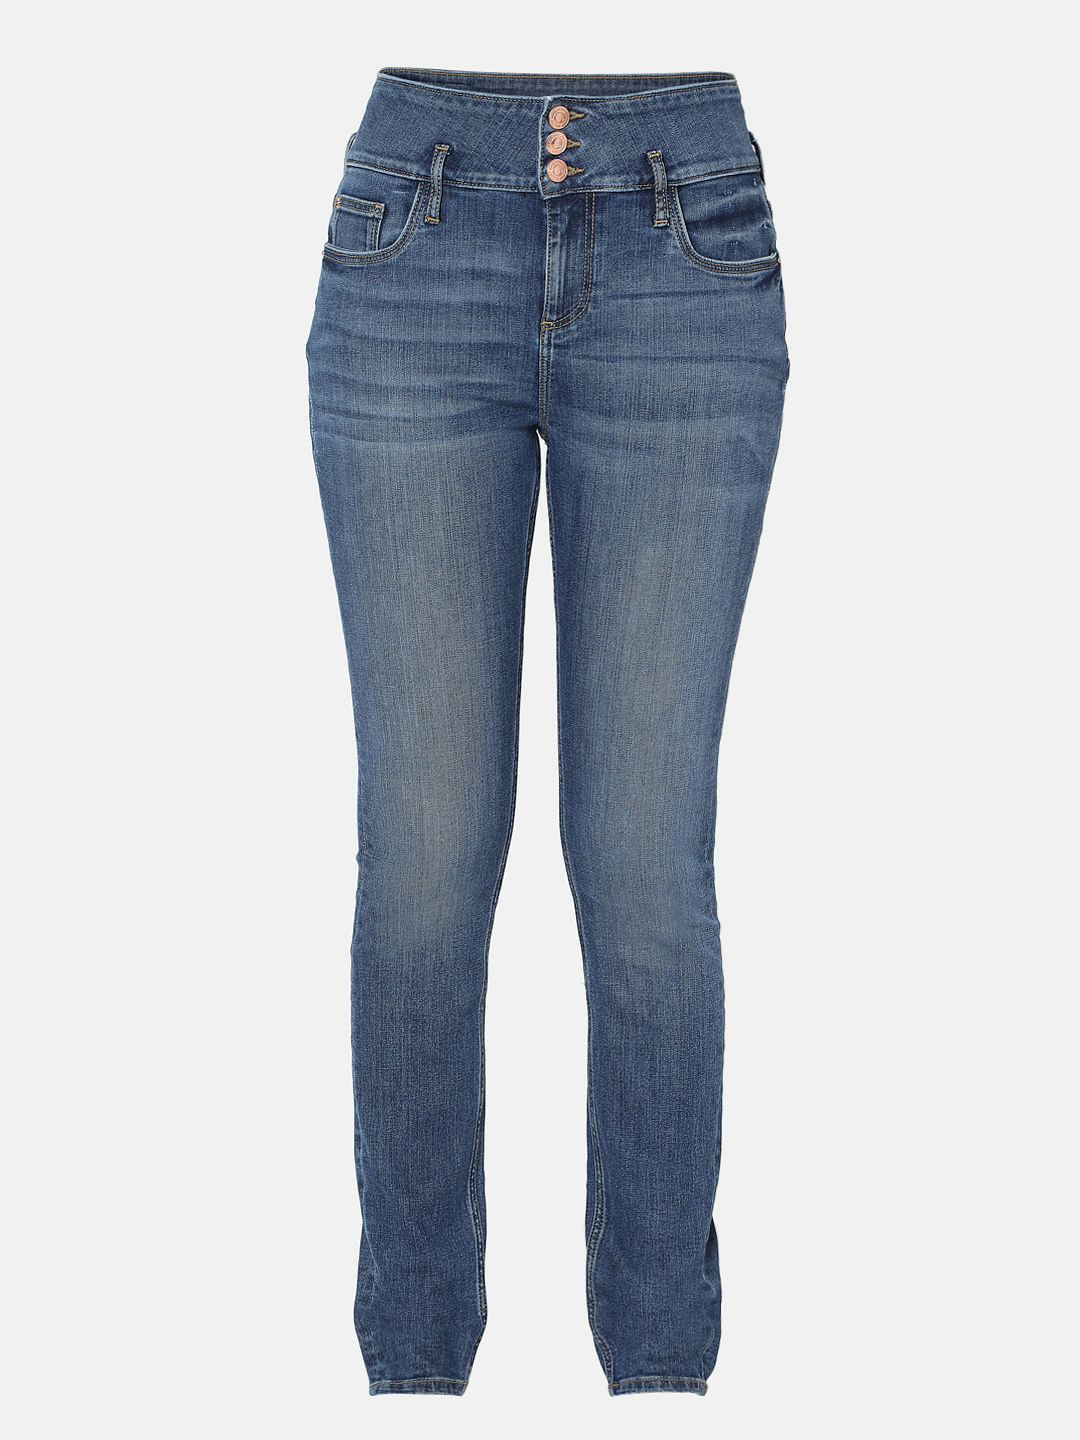 Shana shorts jeans discount 68% WOMEN FASHION Jeans Ripped Navy Blue 34                  EU 